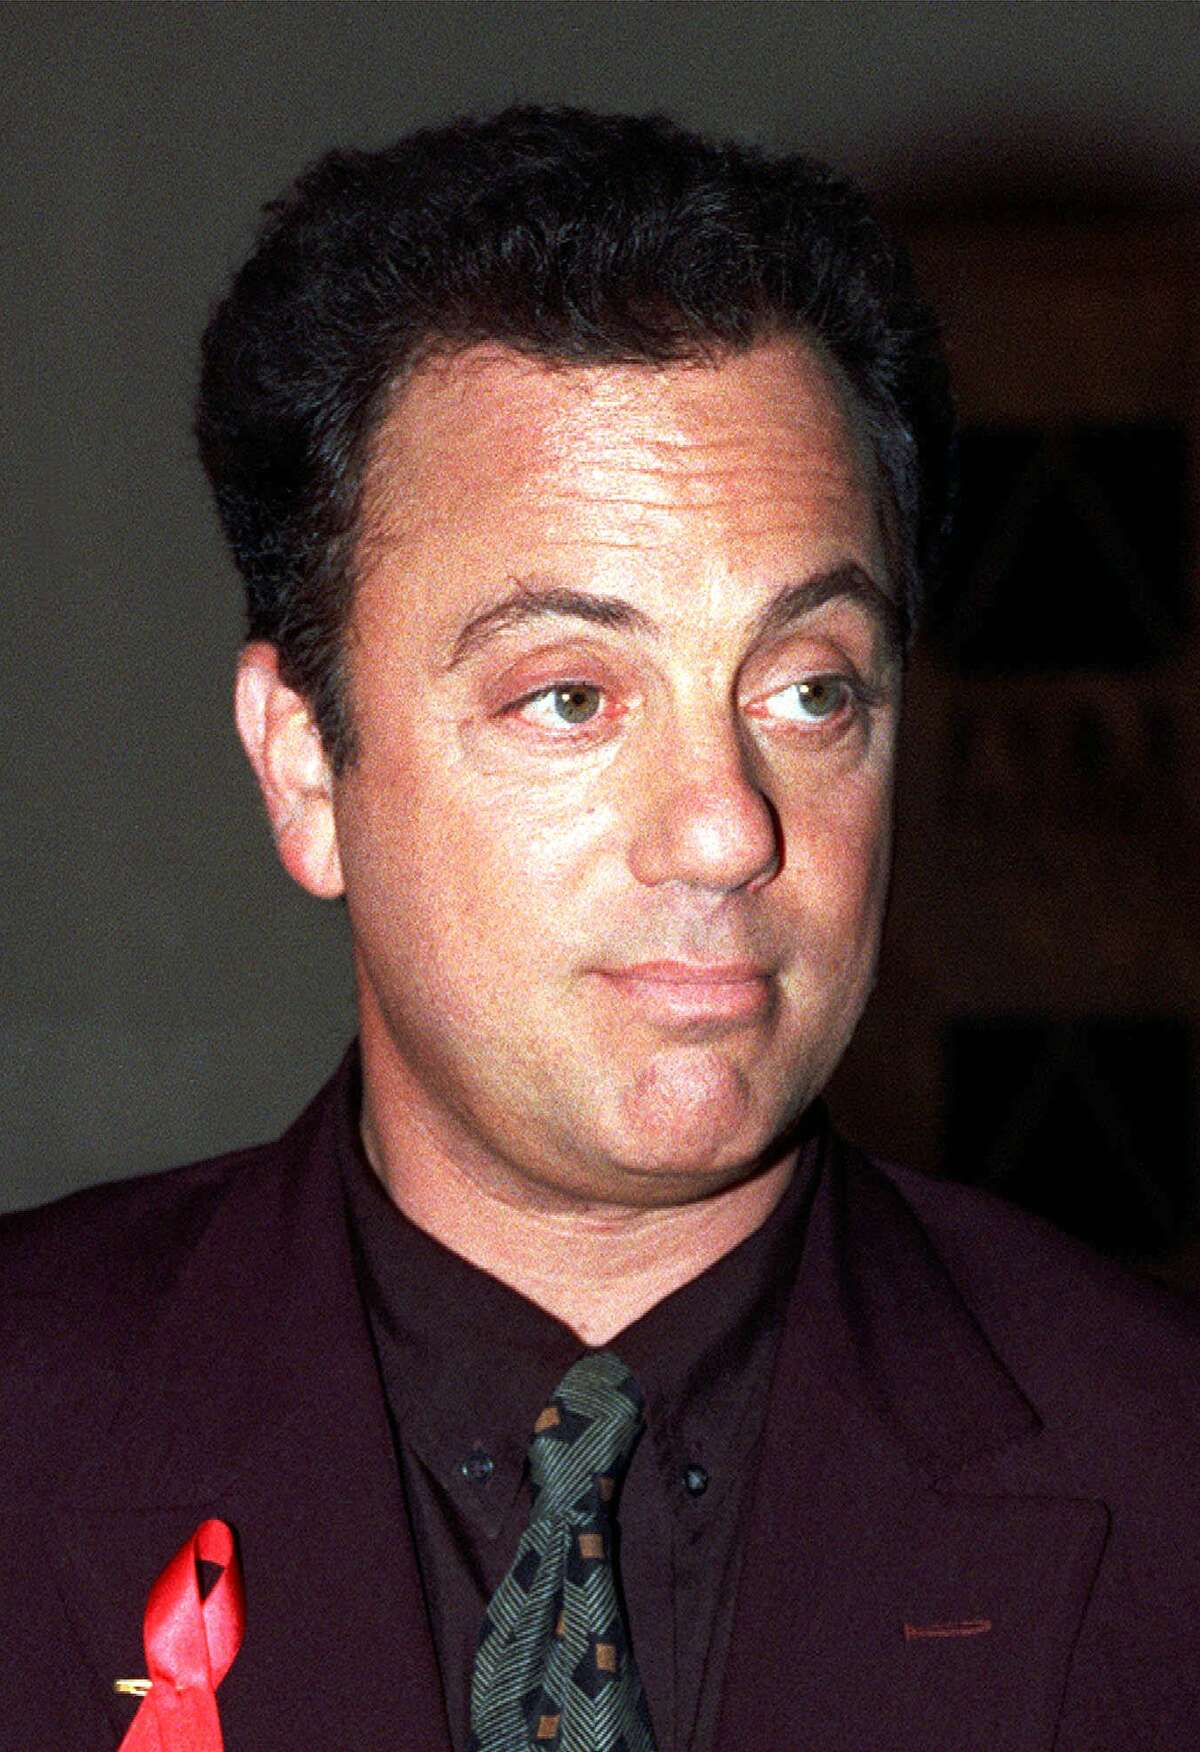 Billy Joel is shown in this Nov. 18, 1992 file photo.